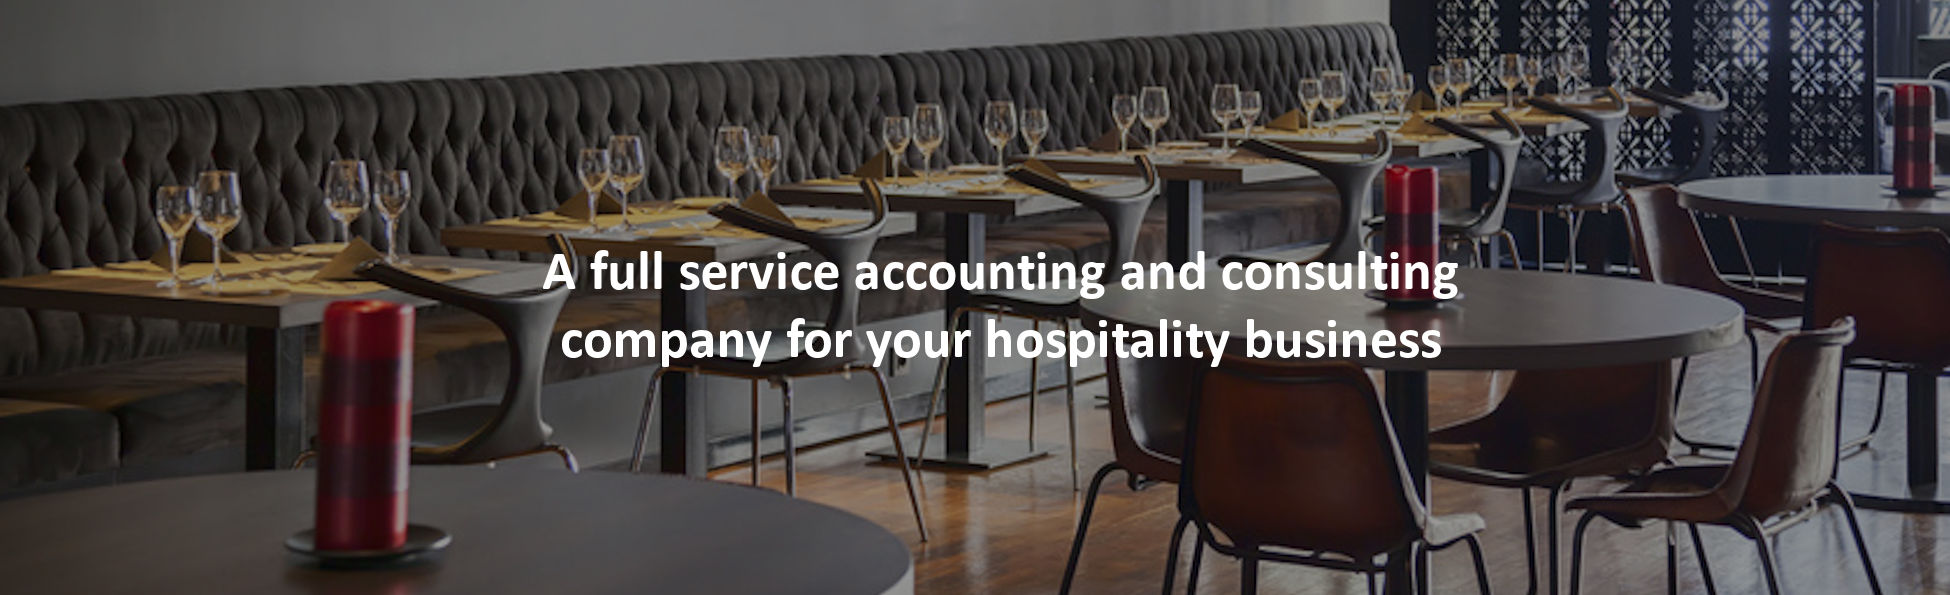 Restaurant Marketing Services, by Strictly Restaurants